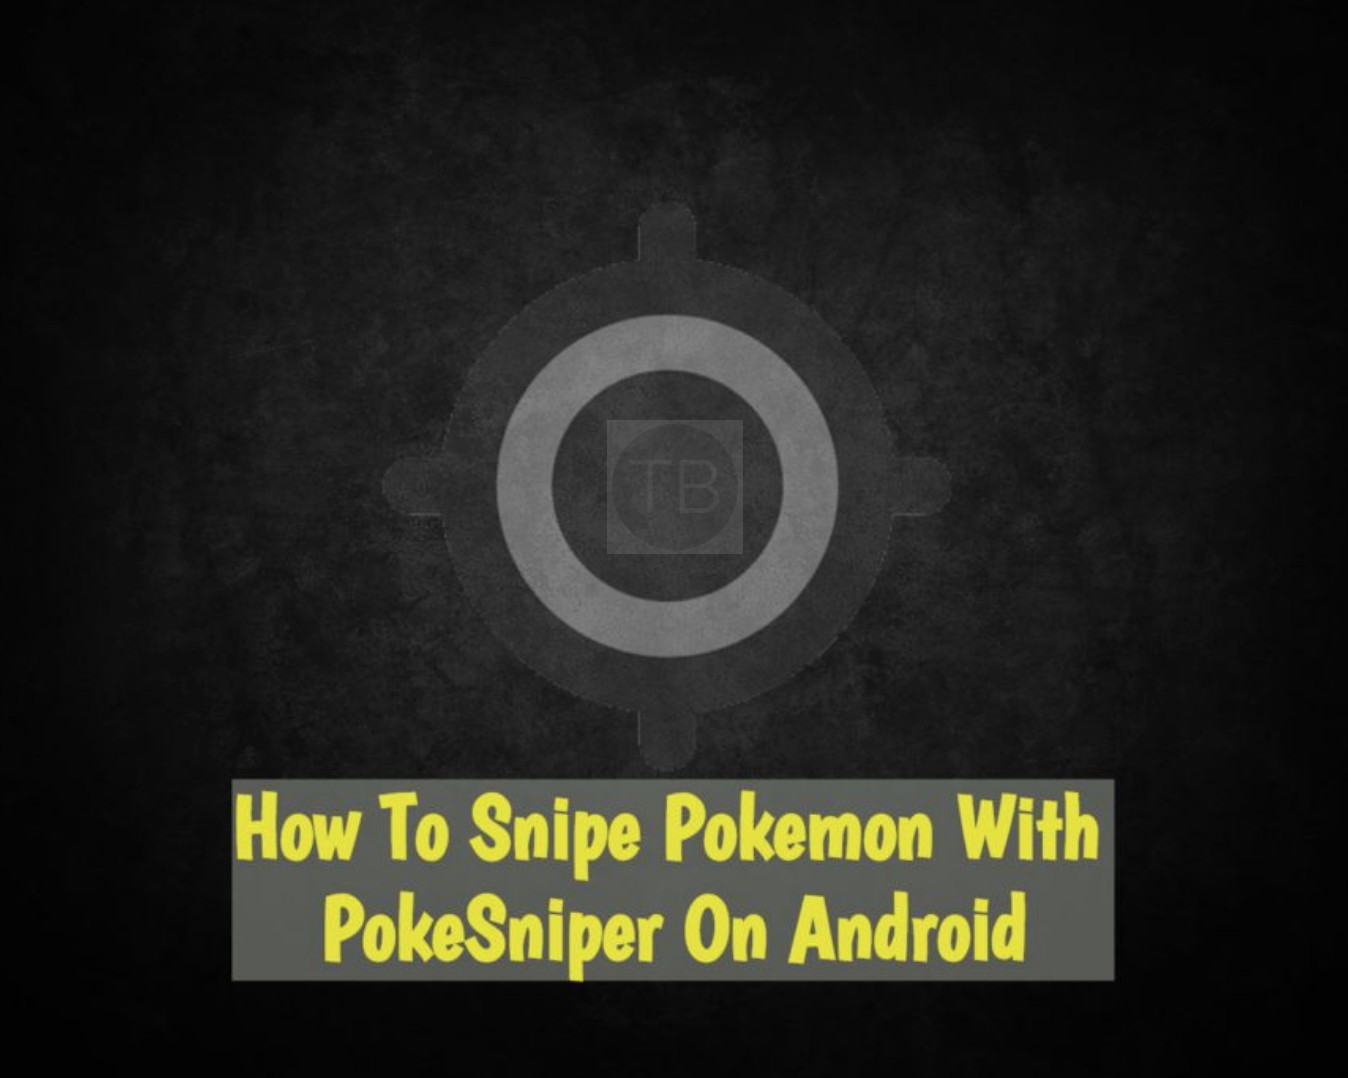 Snipe Pokemon With PokeSniper